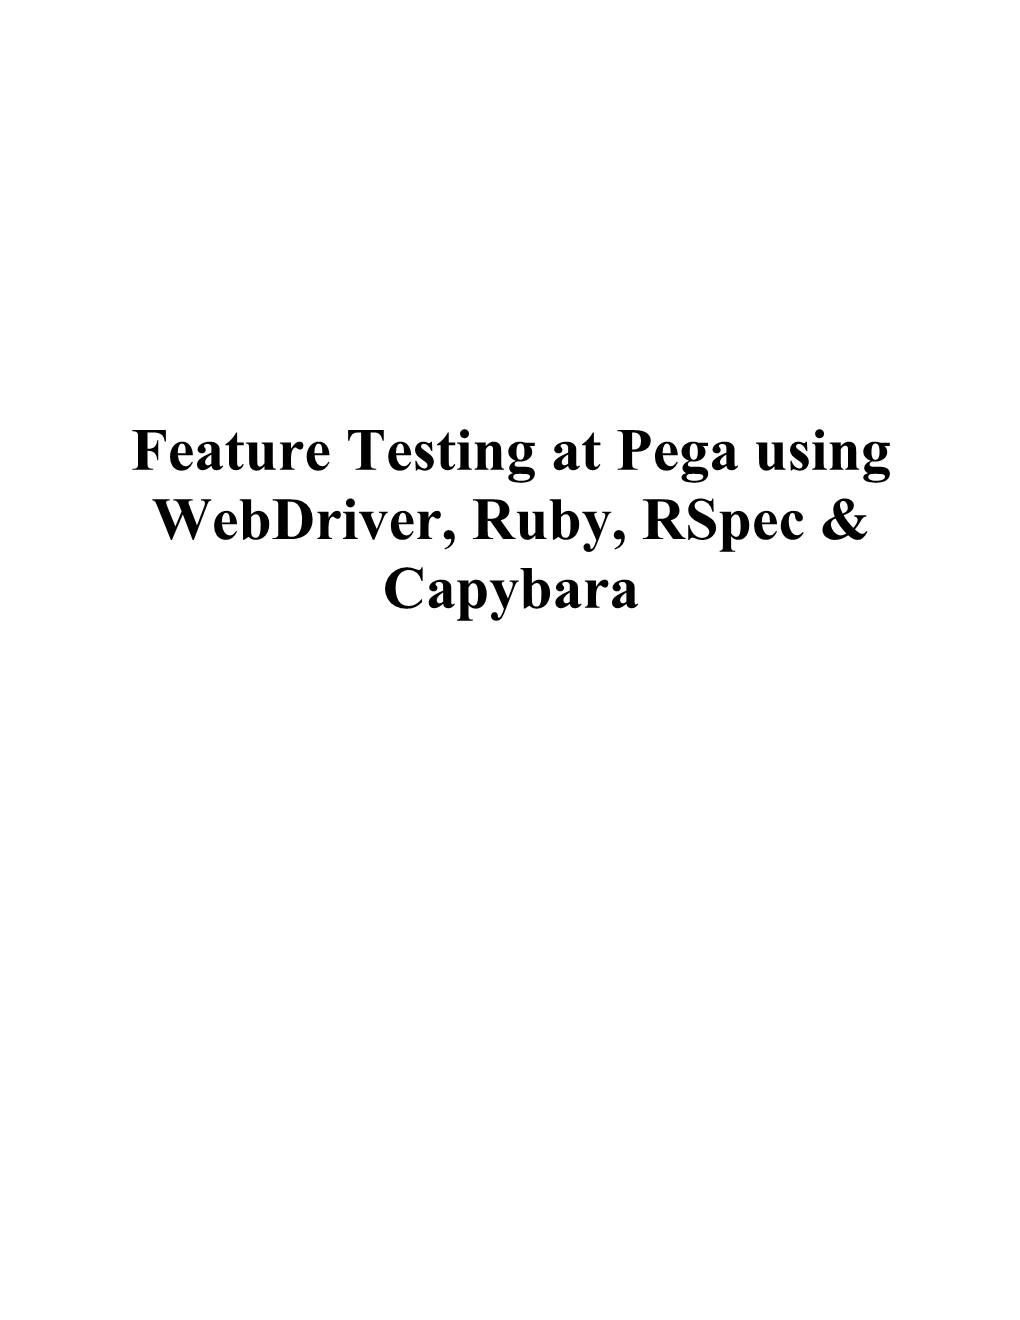 Feature Testing at Pega Using Webdriver, Ruby, Rspec & Capybara